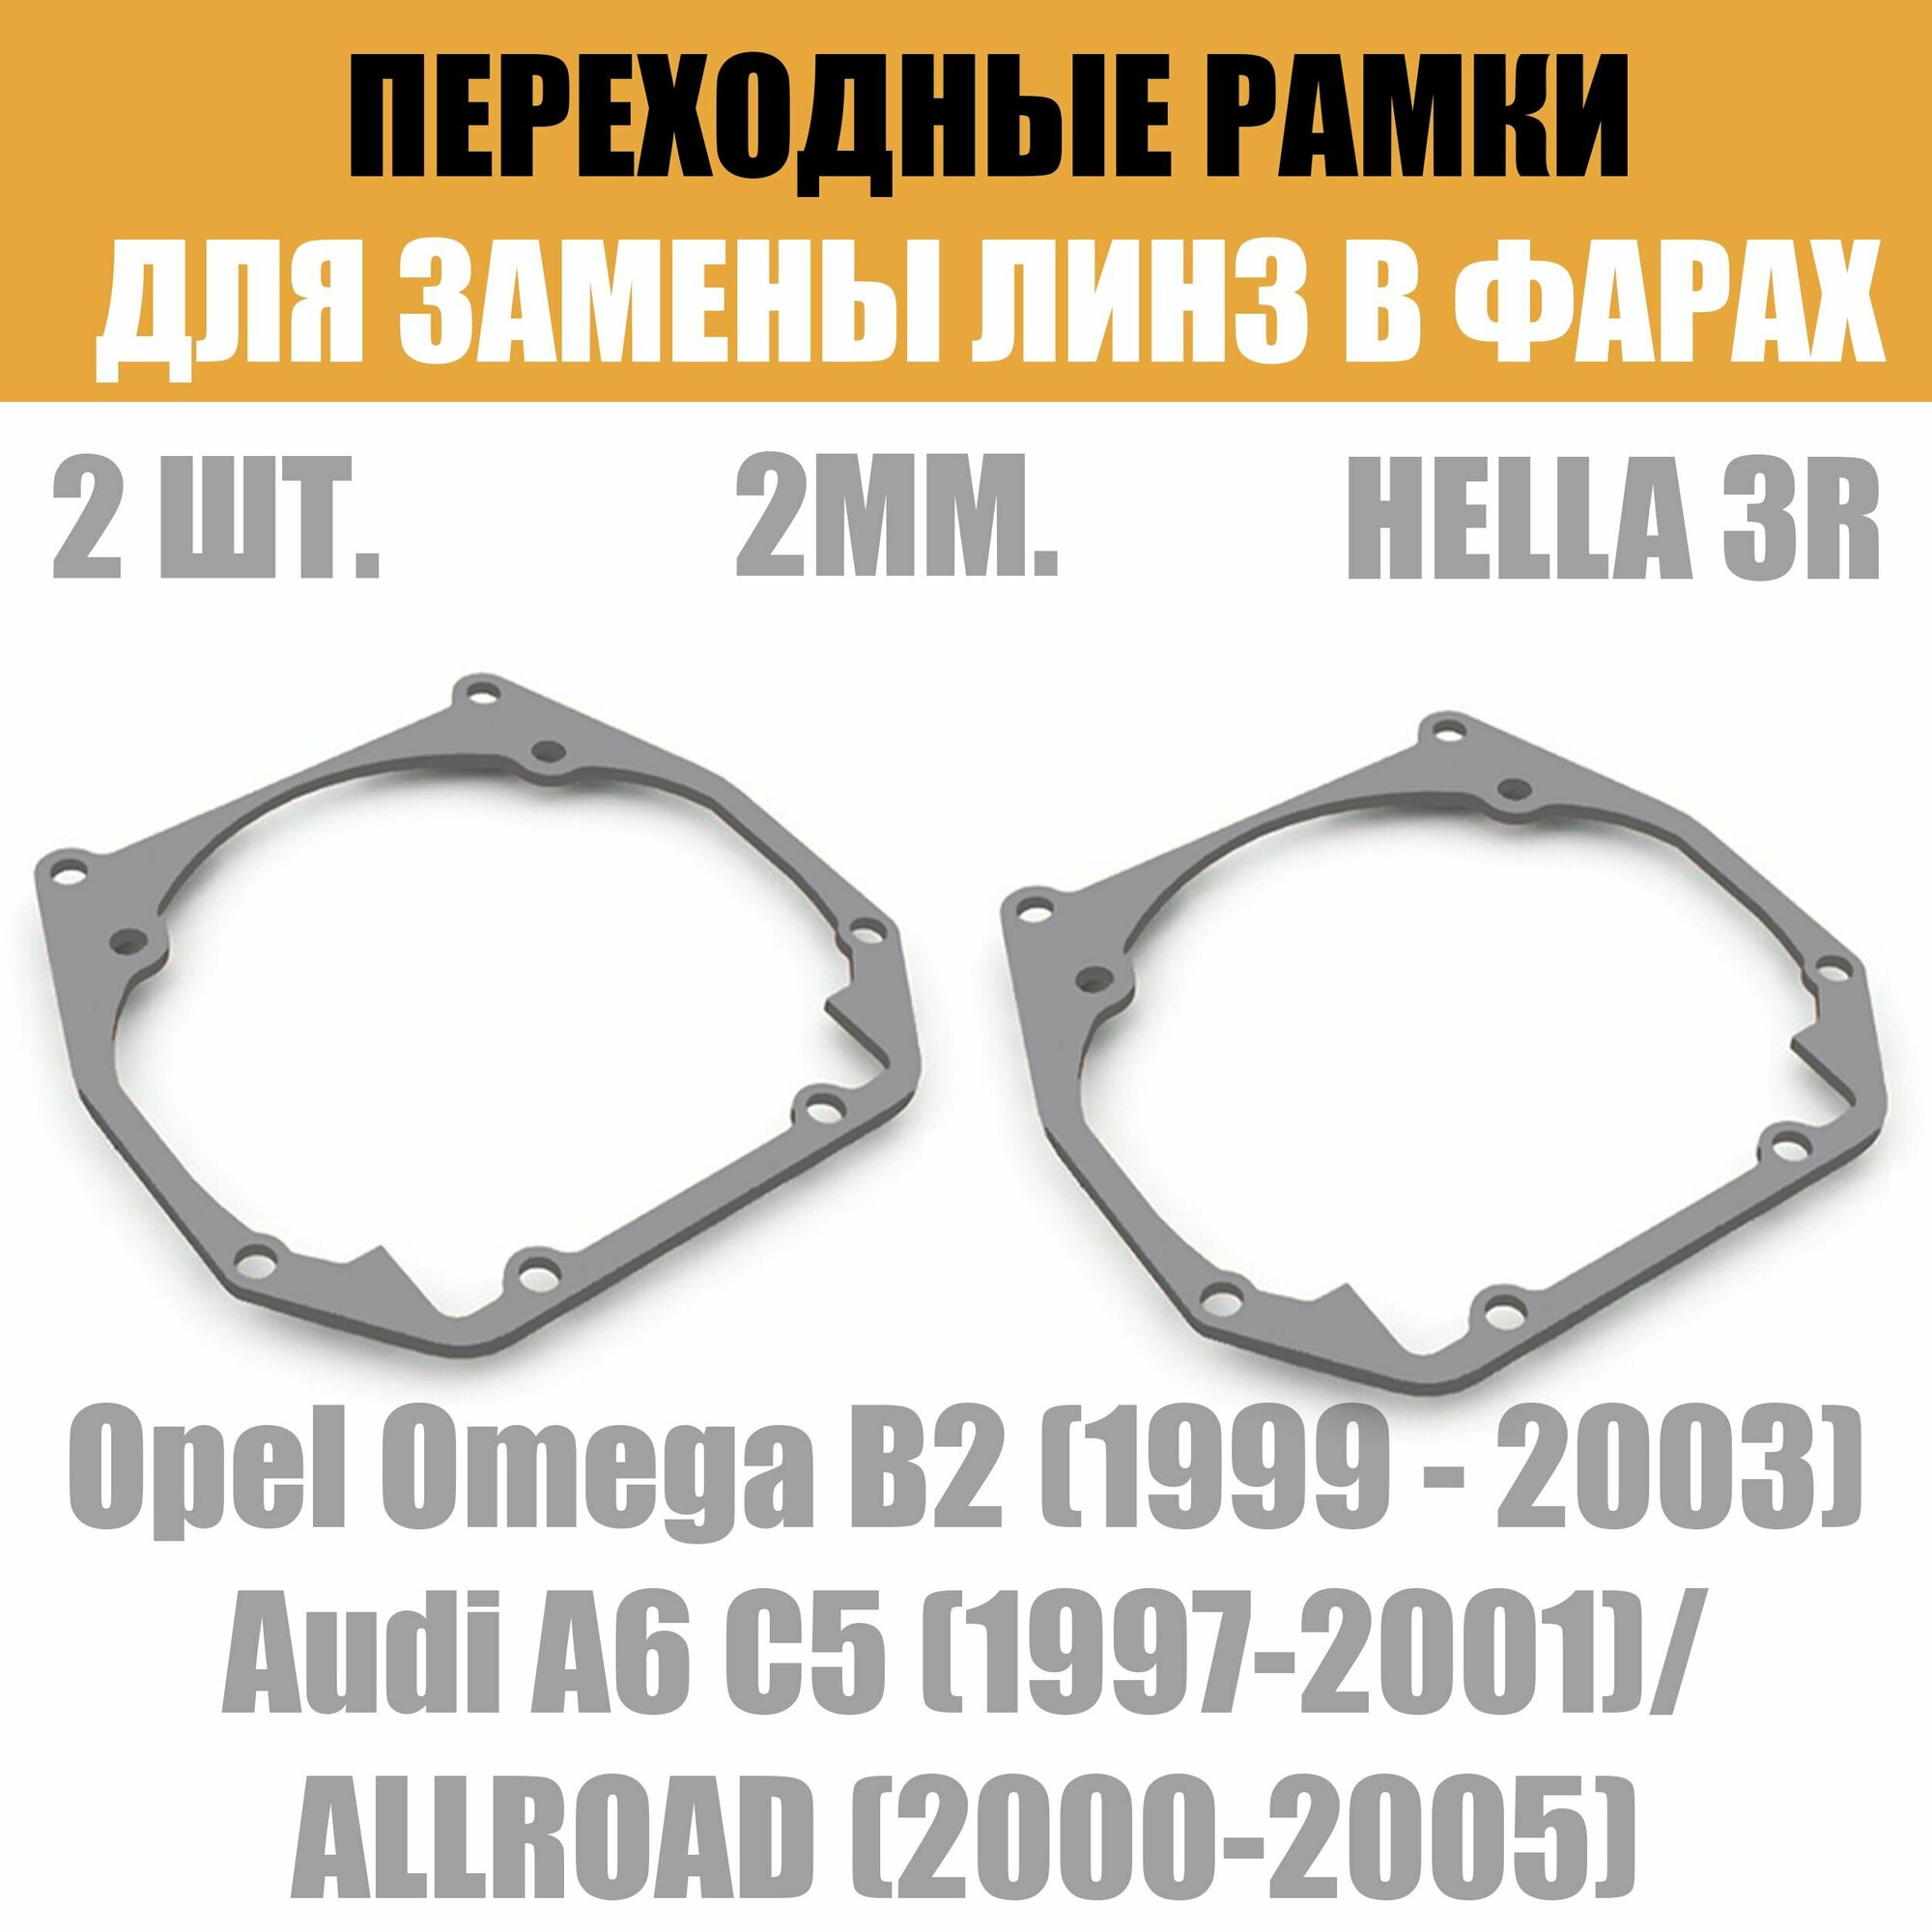 Переходные рамки для линз №61 на Audi ALLROAD (2000-2005)/Opel Omega B2 (1999 - 2003) под модуль Hella 3R/Hella 3 (Комплект 2шт)